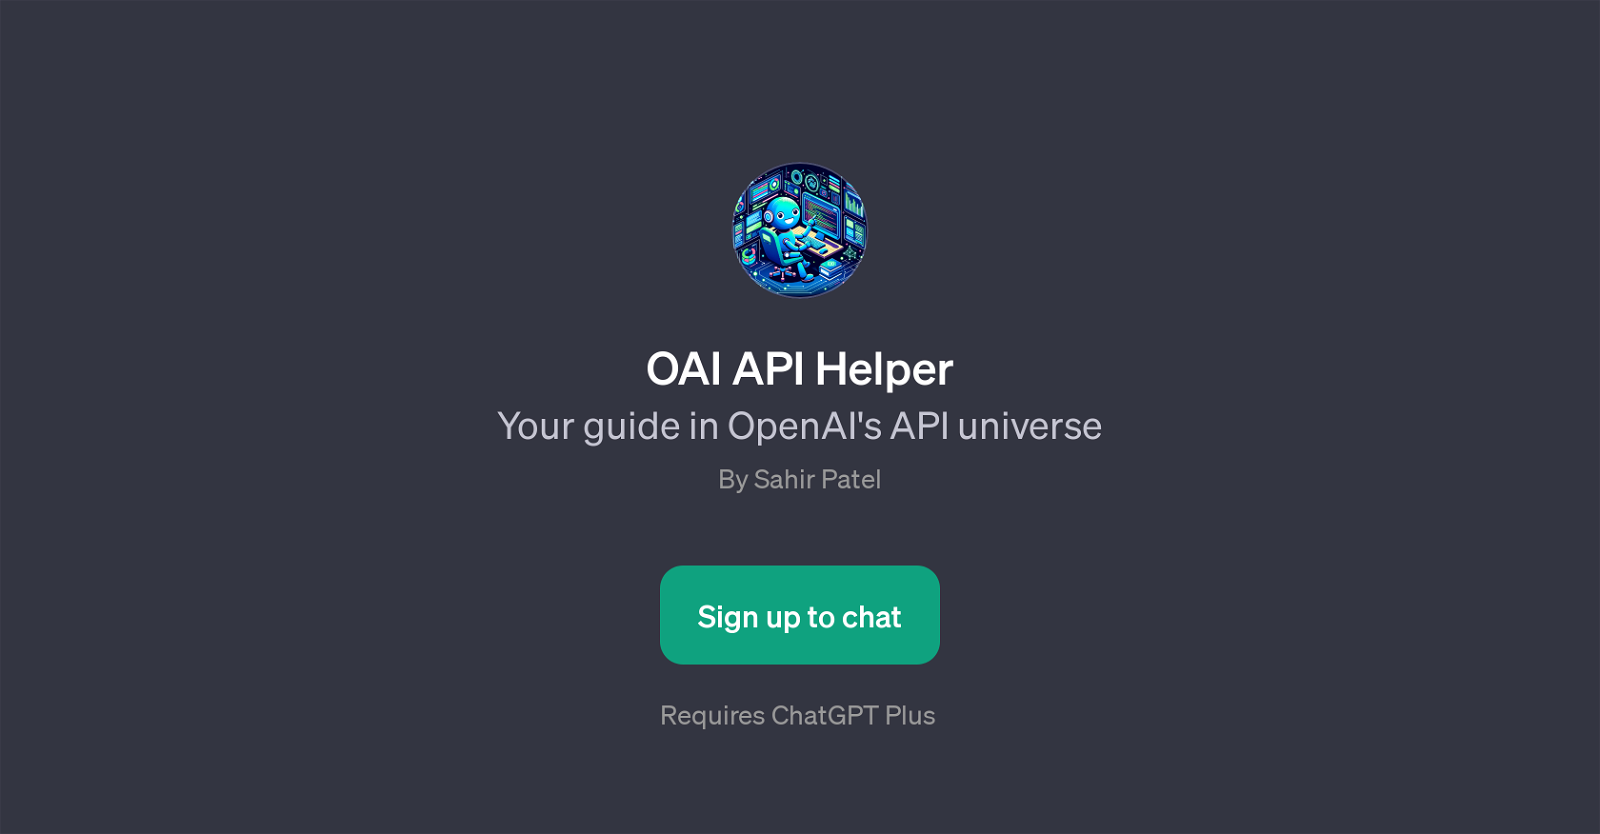 OAI API Helper website